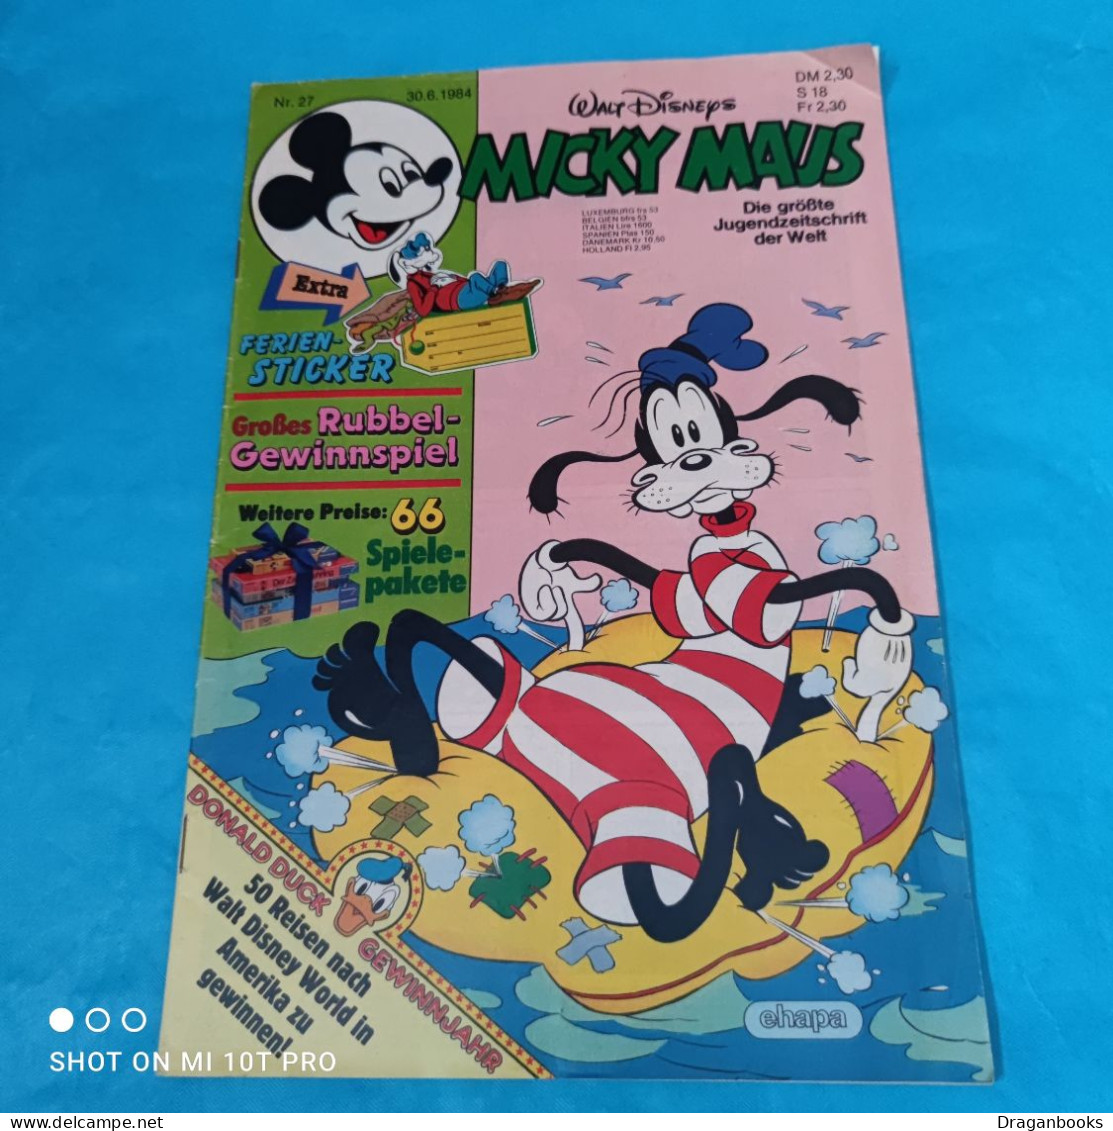 Micky Maus Nr. 27 - 30.6.1984 - Walt Disney